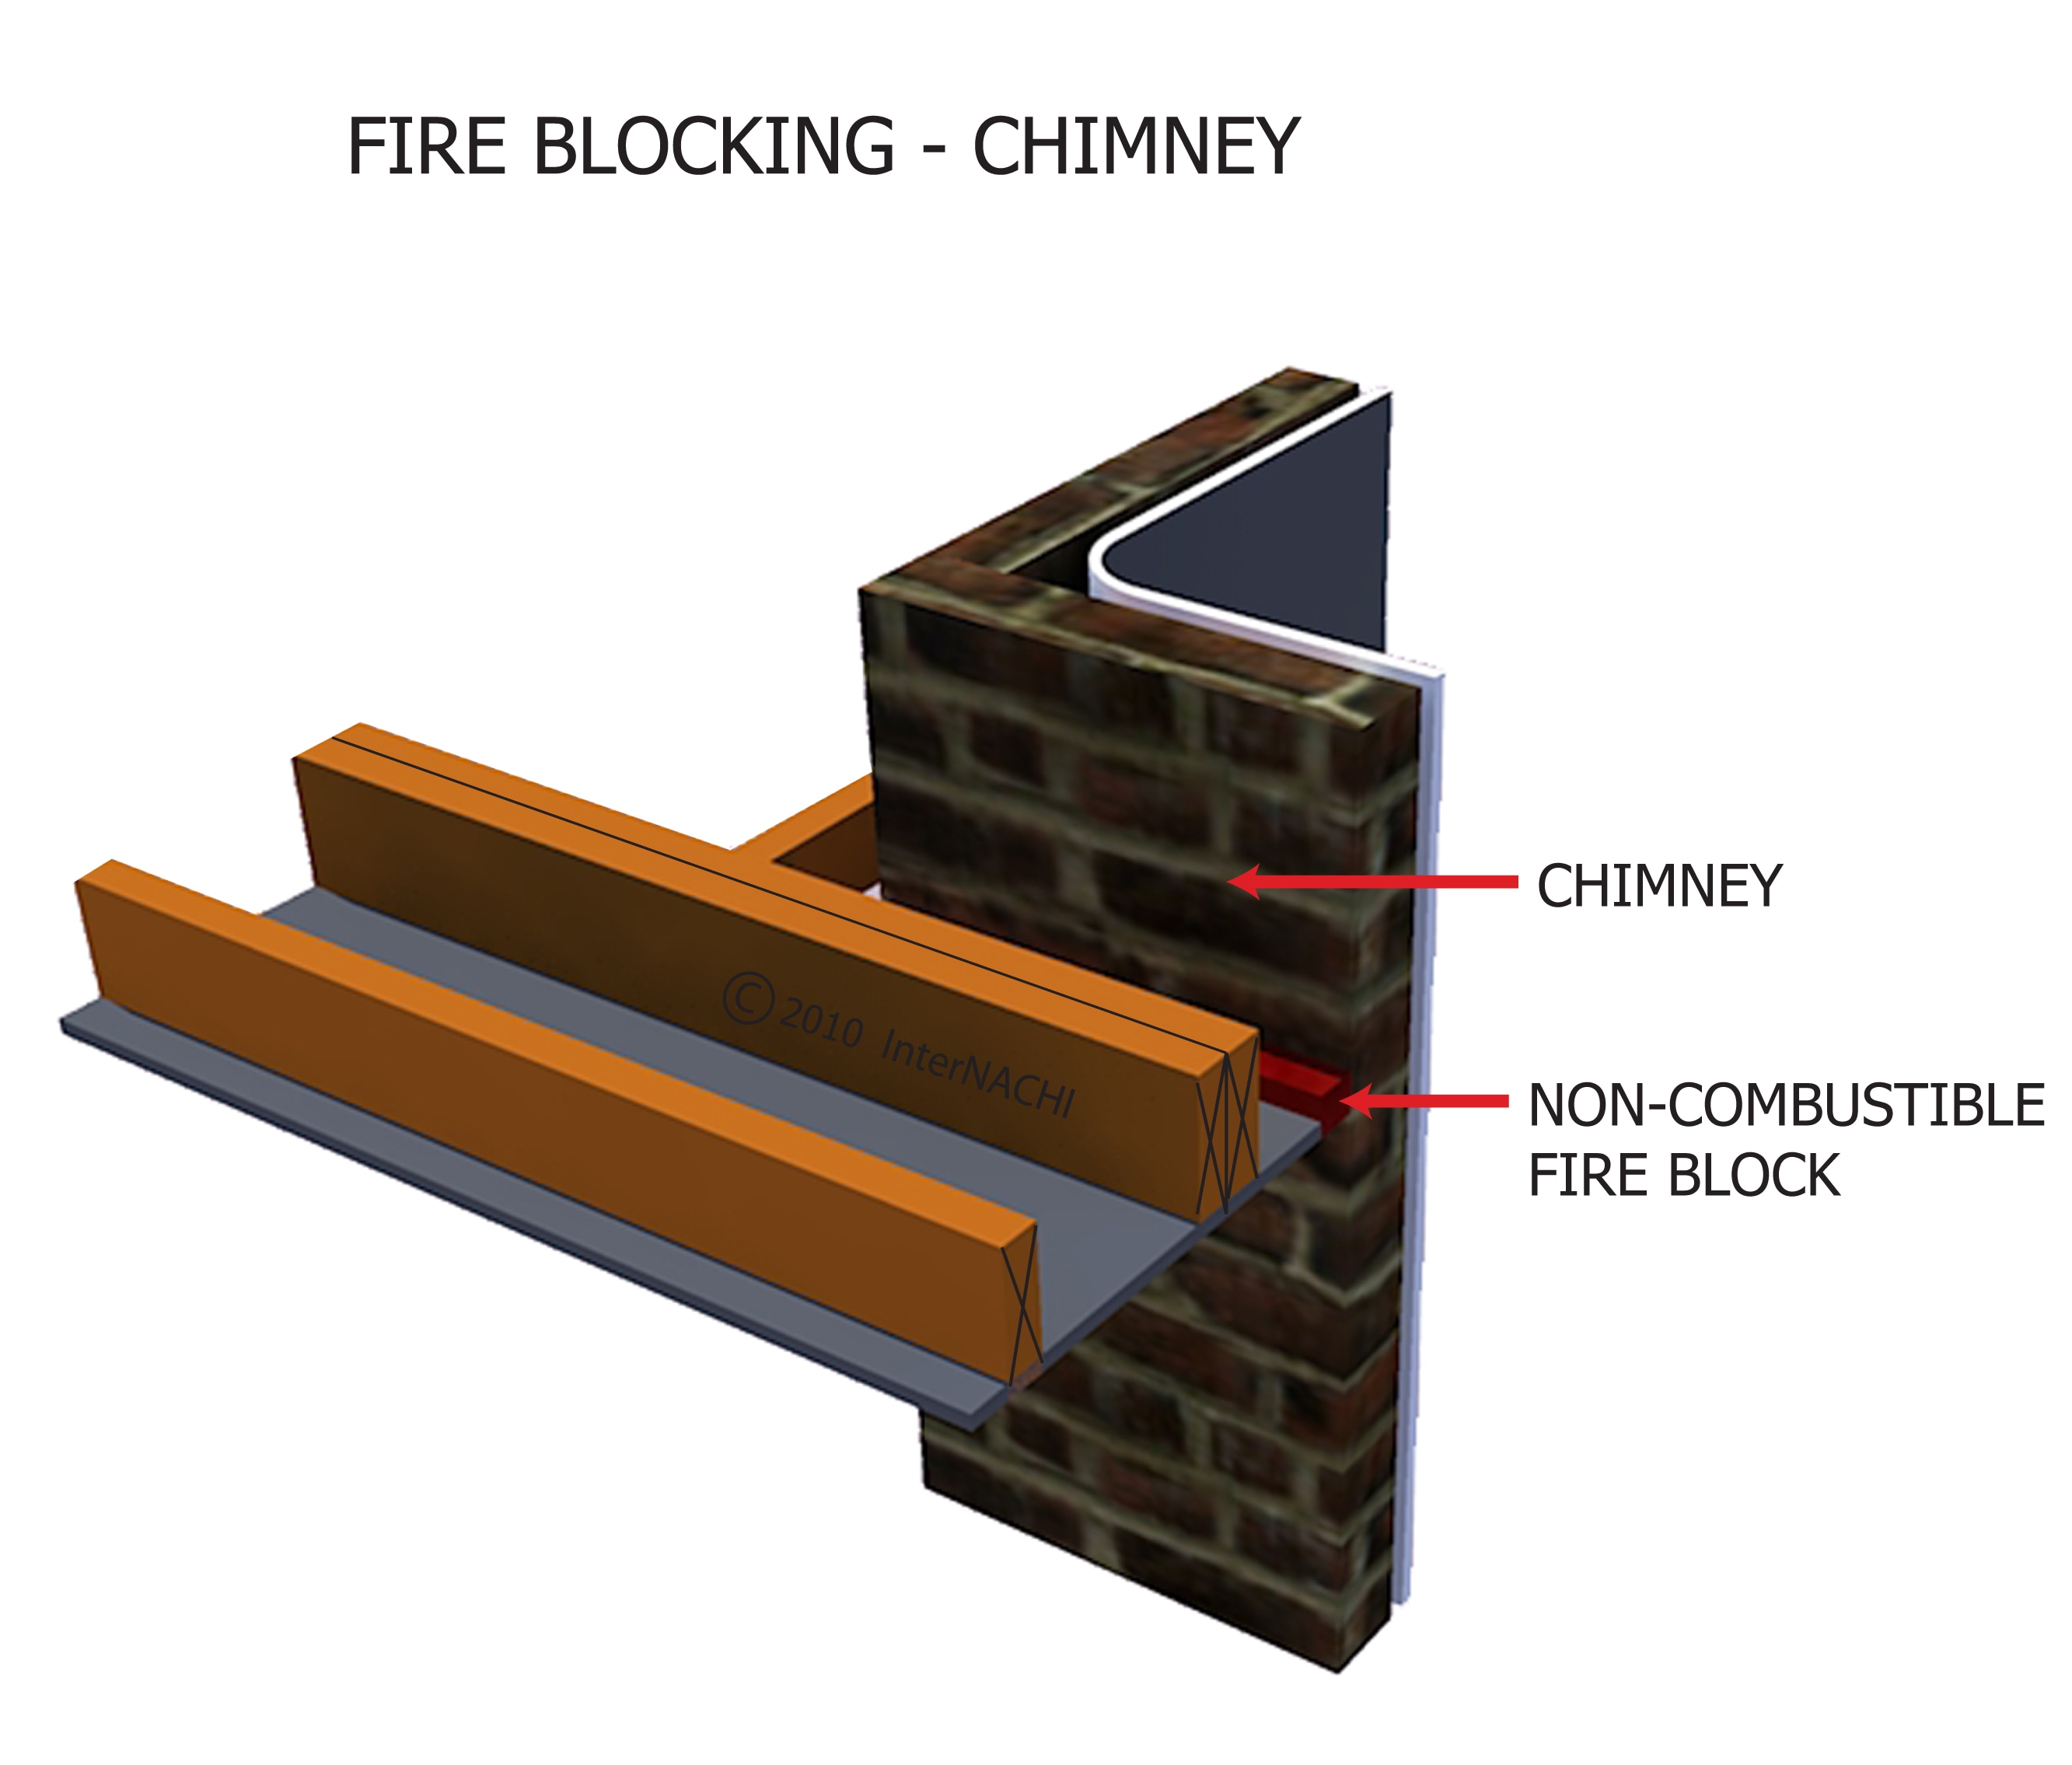 Fire blocking - chimney.